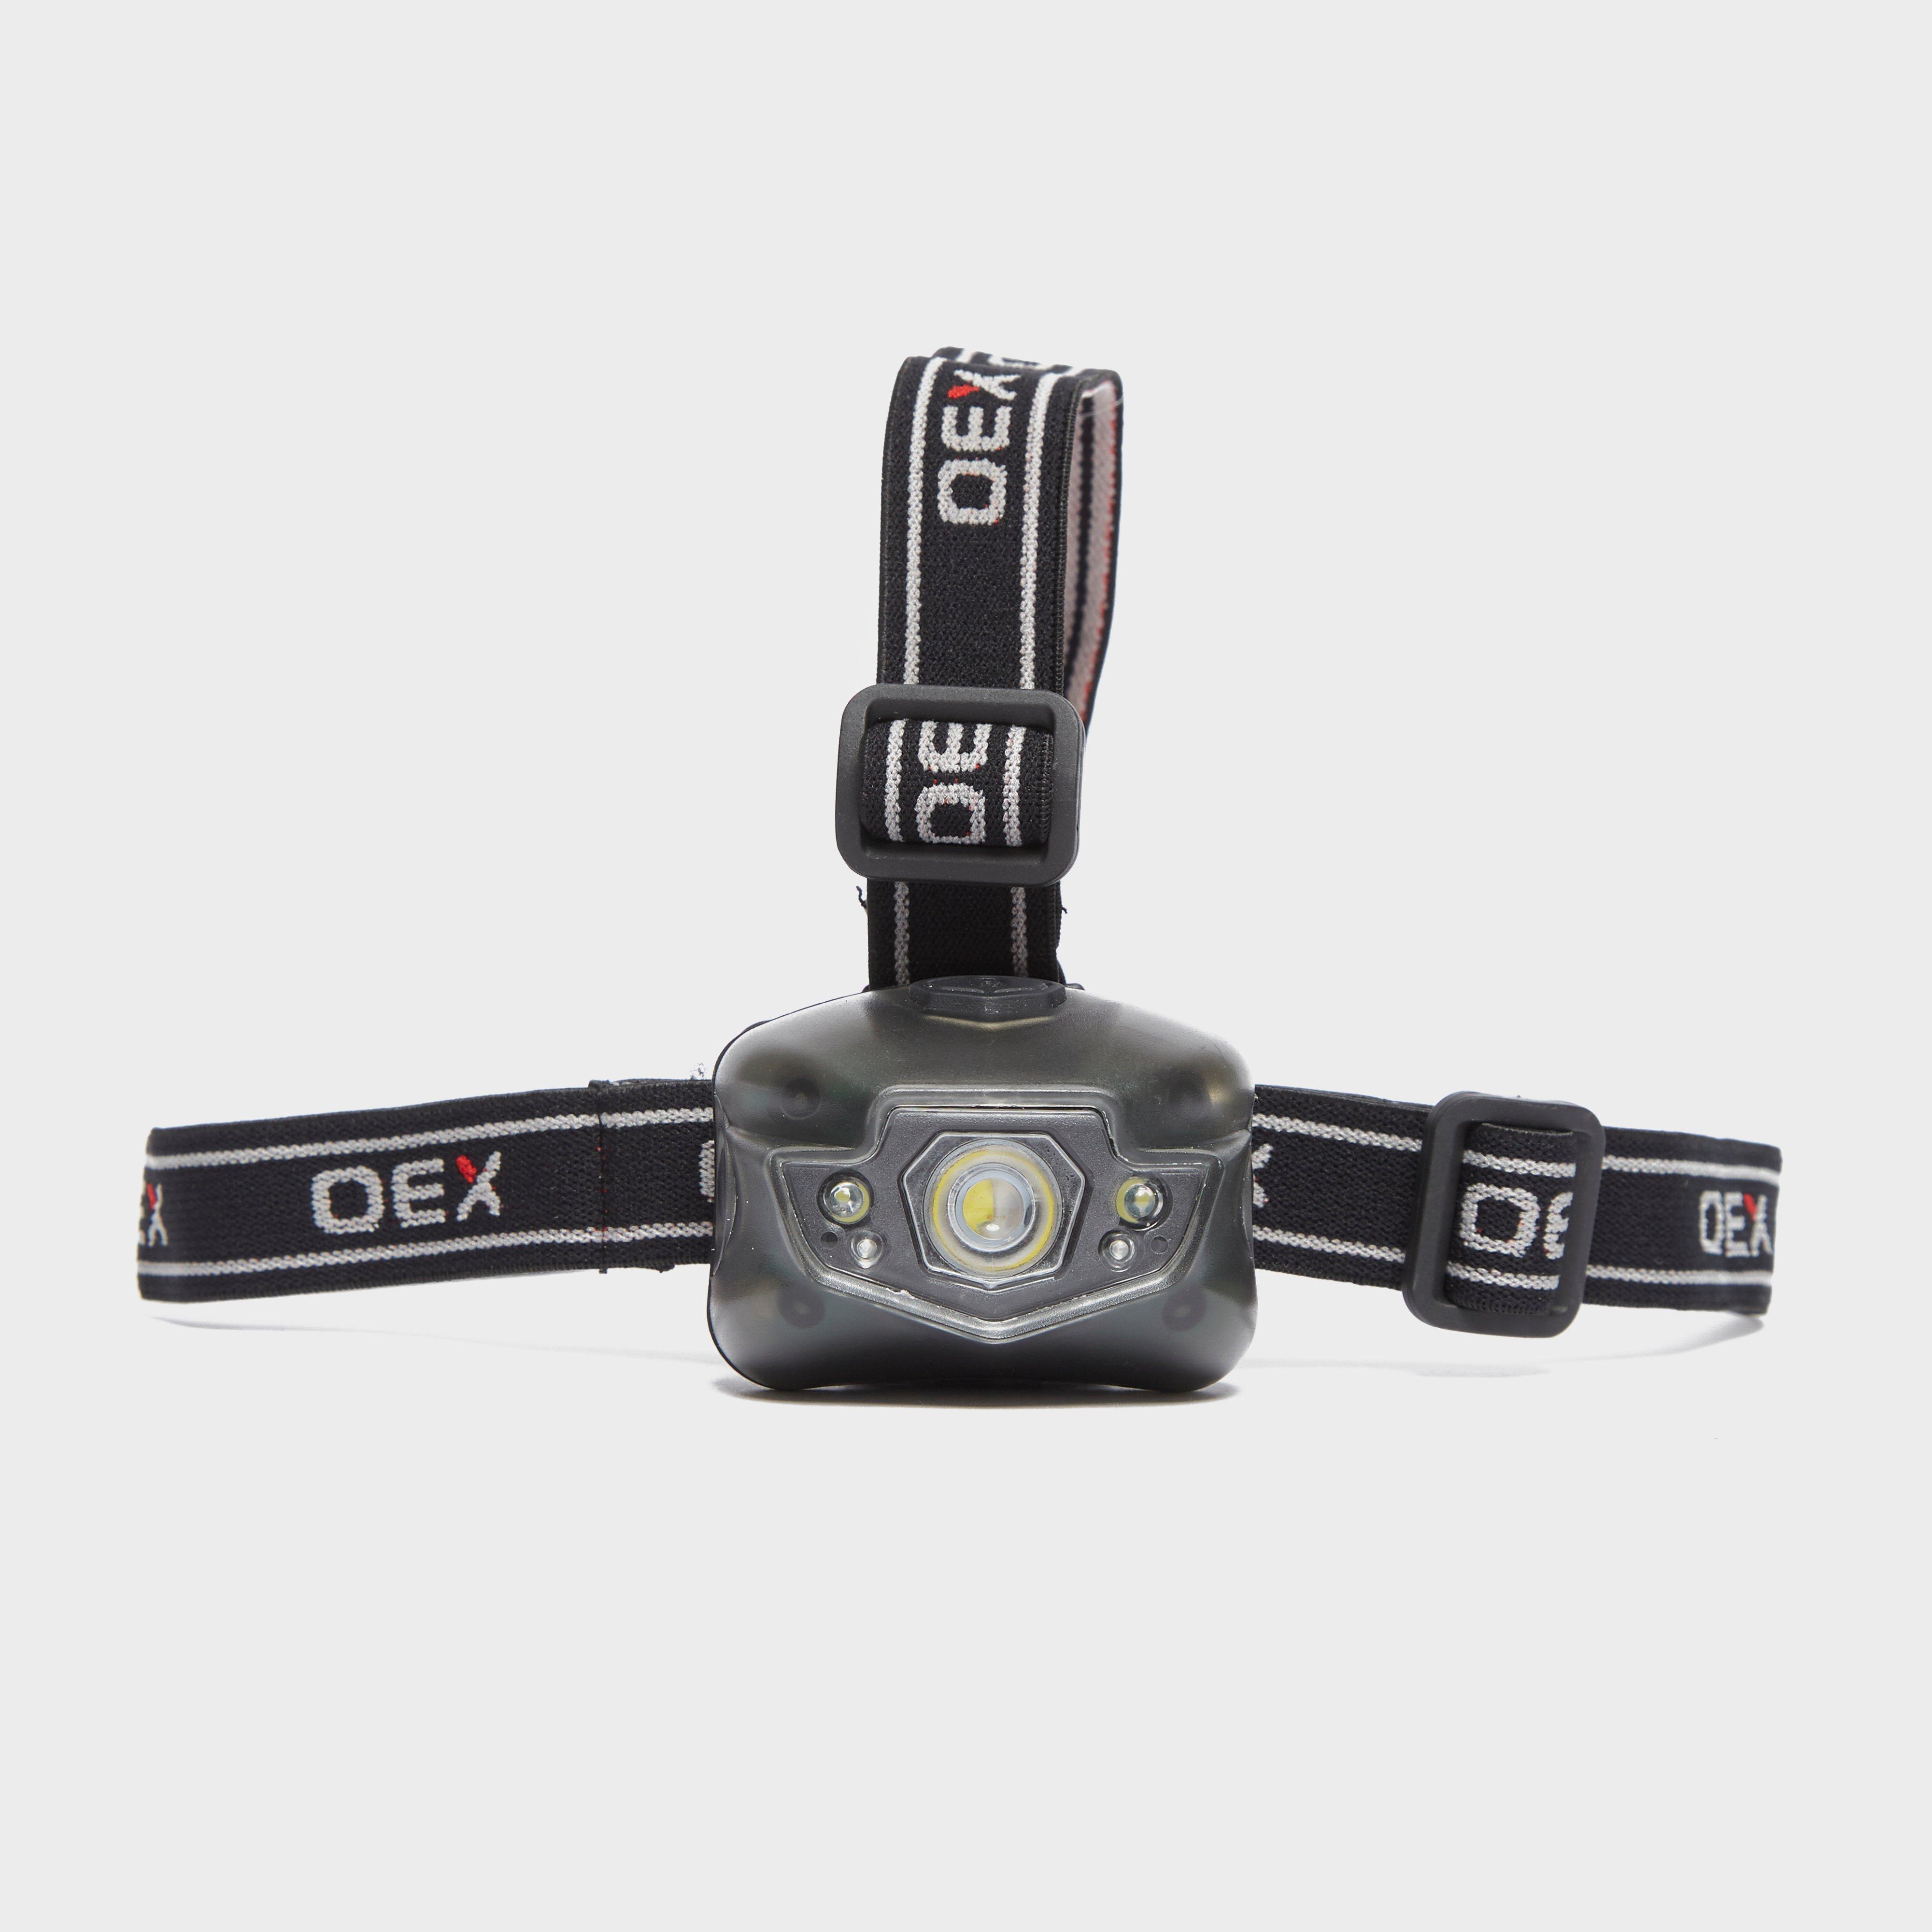 New Oex 150 Lumen Cree Headtorch 5054306334210 | eBay